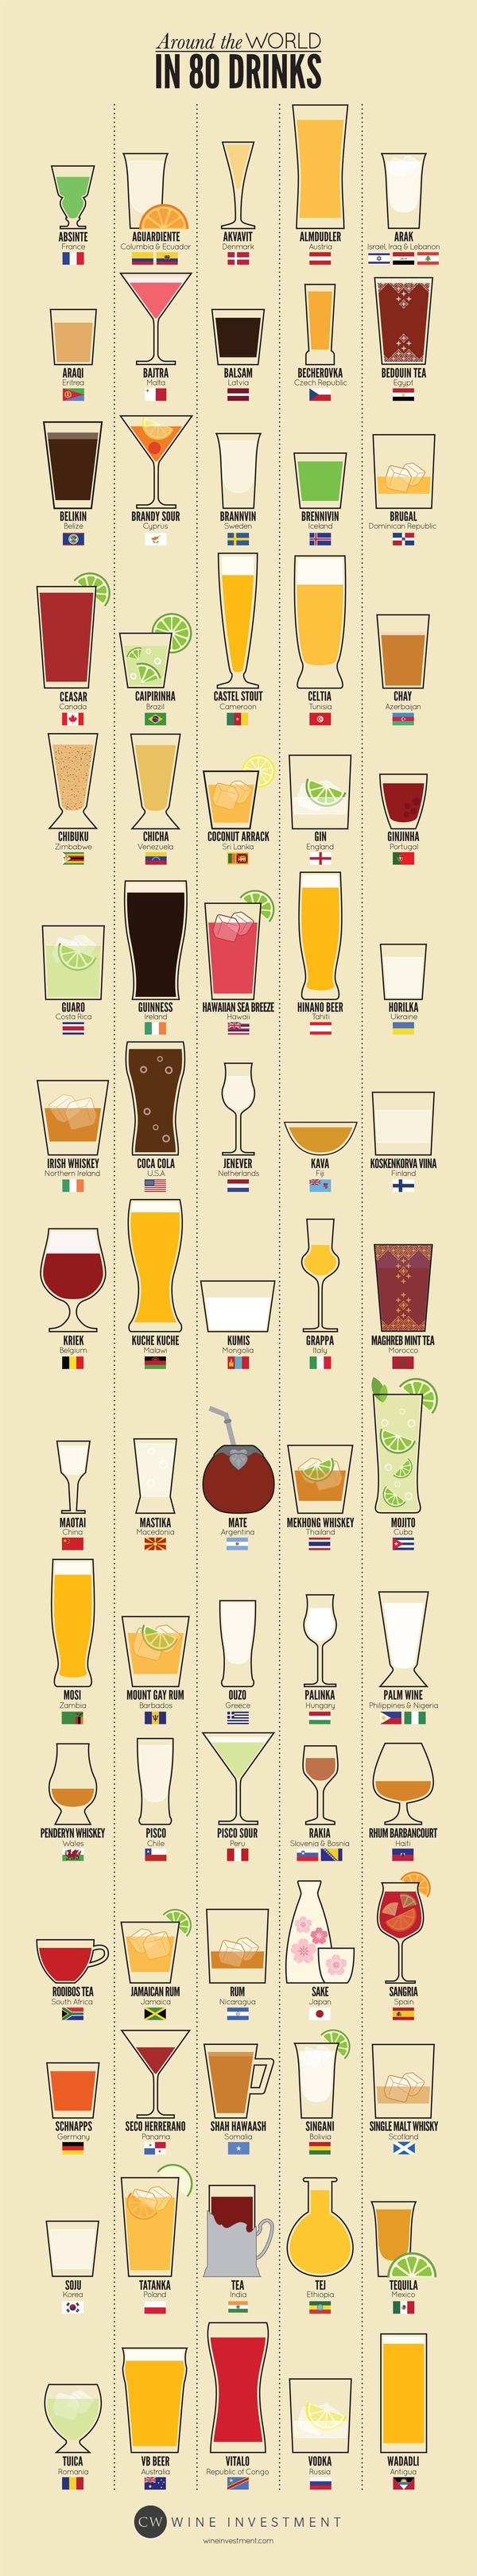 80 drinks infographic